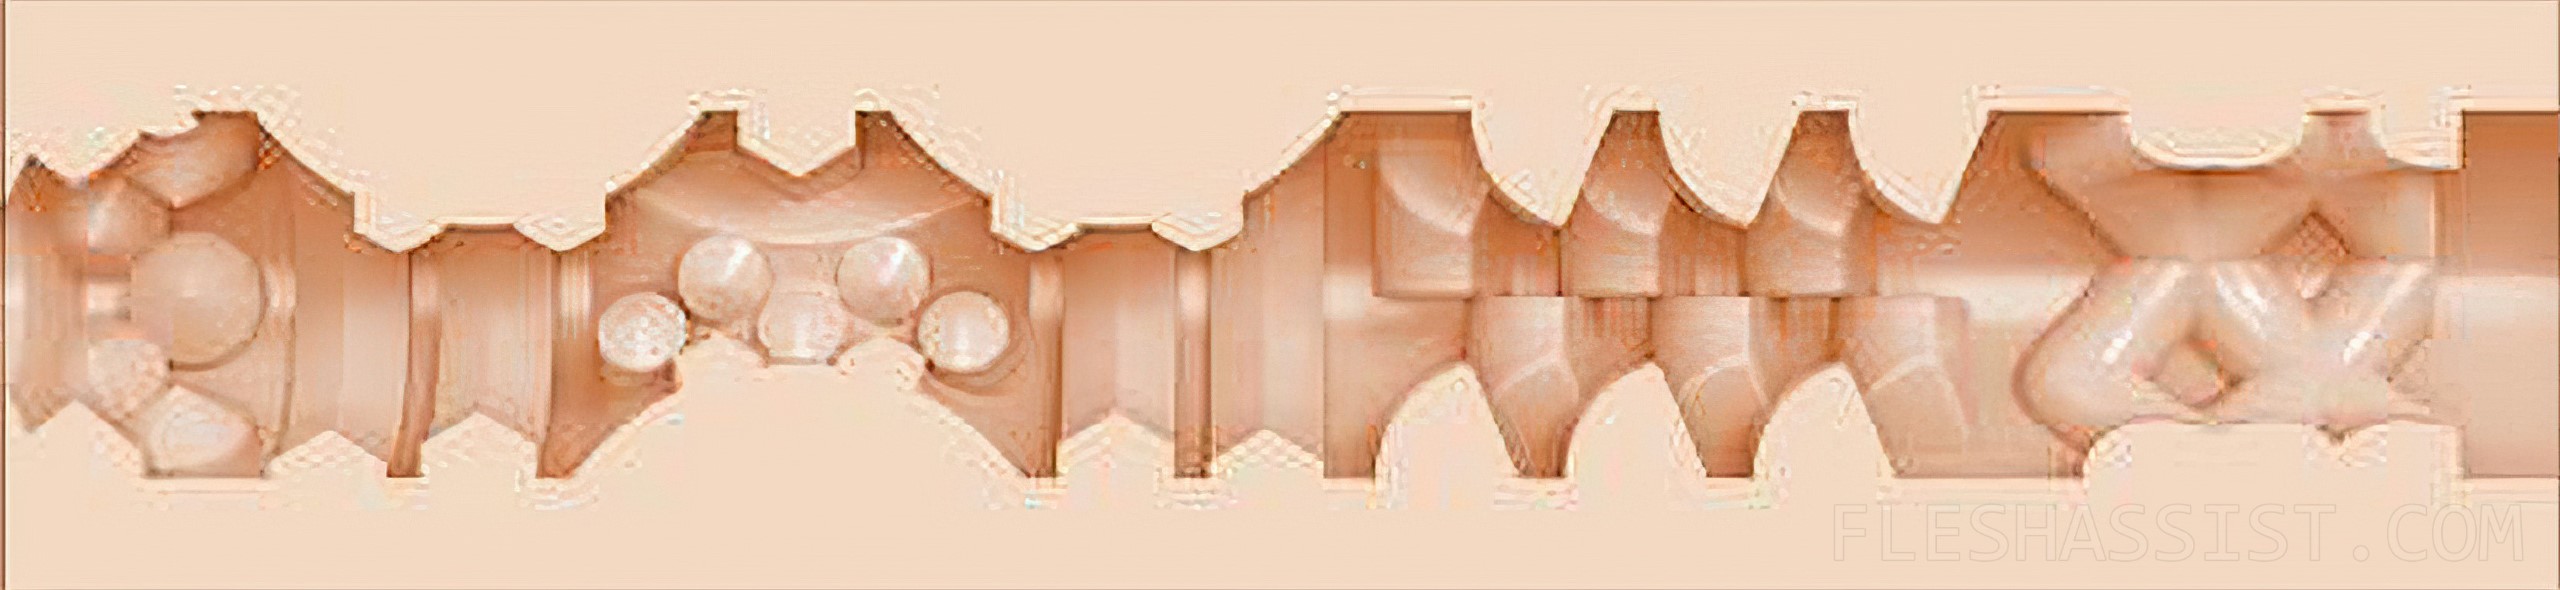 Spank Bank Texture Image